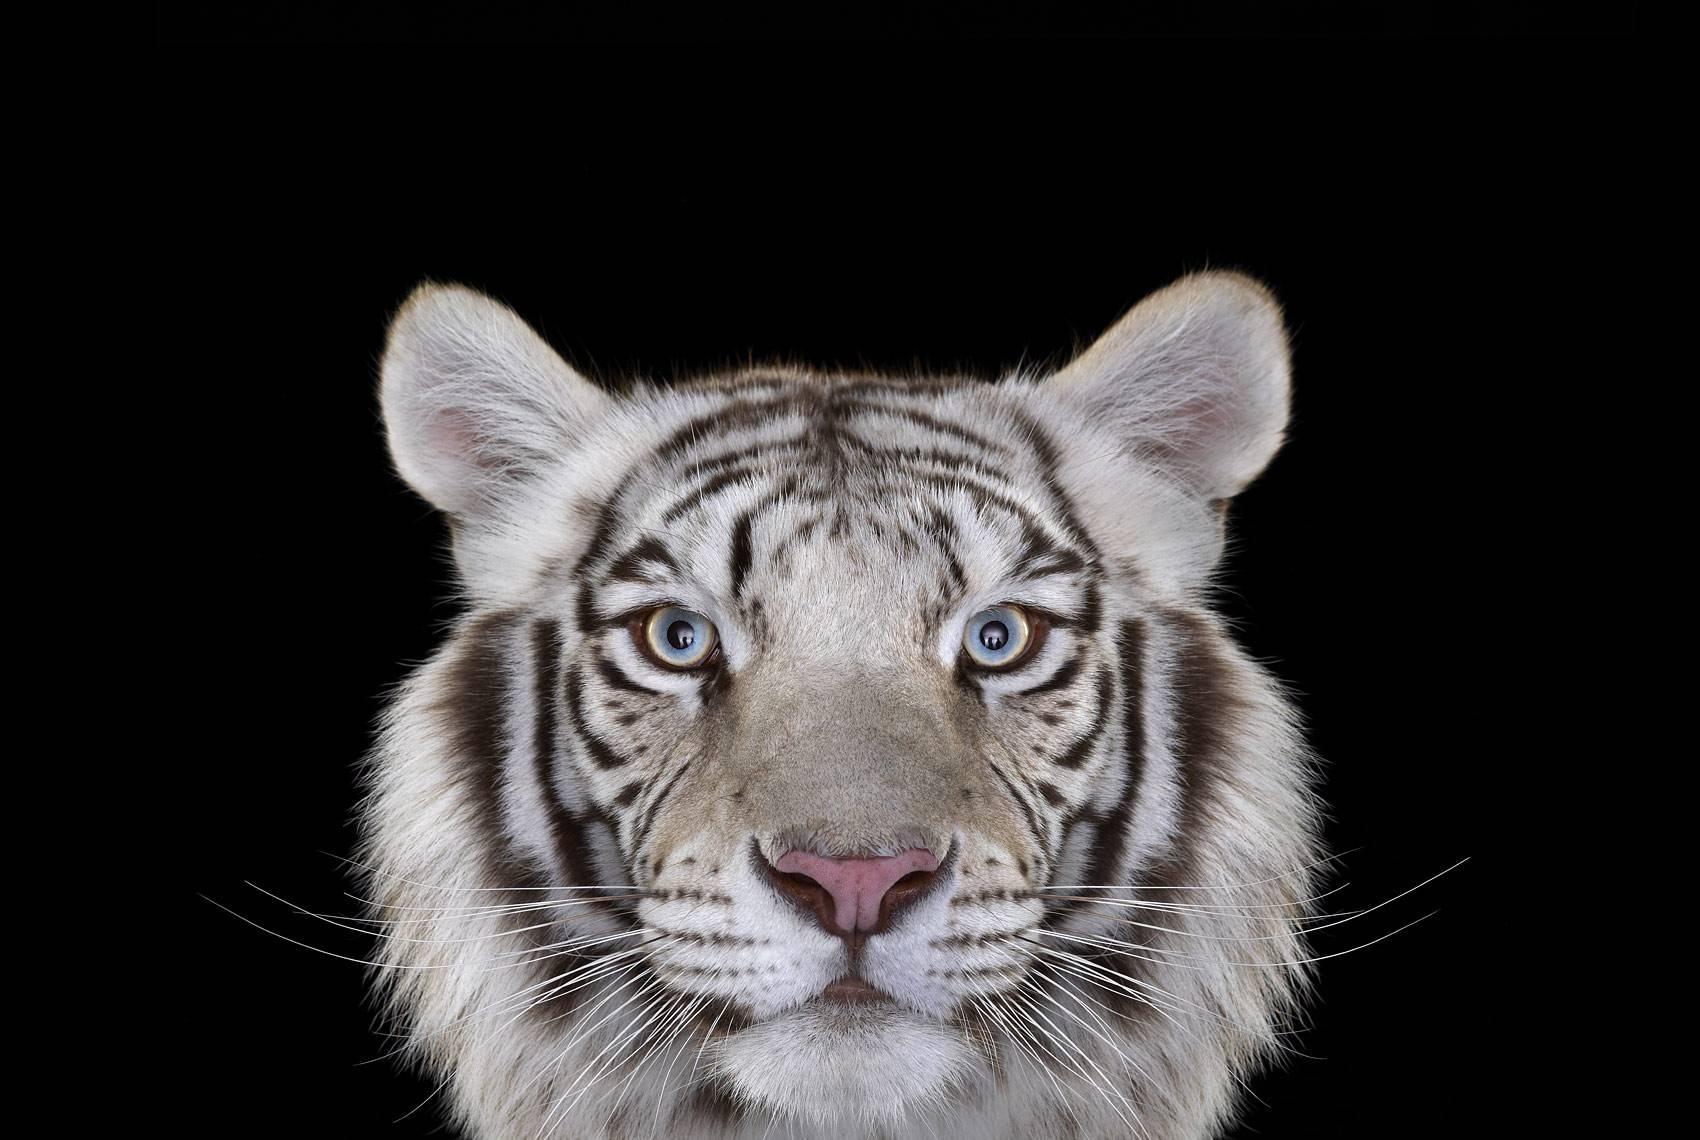 Brad Wilson Portrait Photograph - White Tiger #4, Los Angeles, CA, 2010 (Large print)